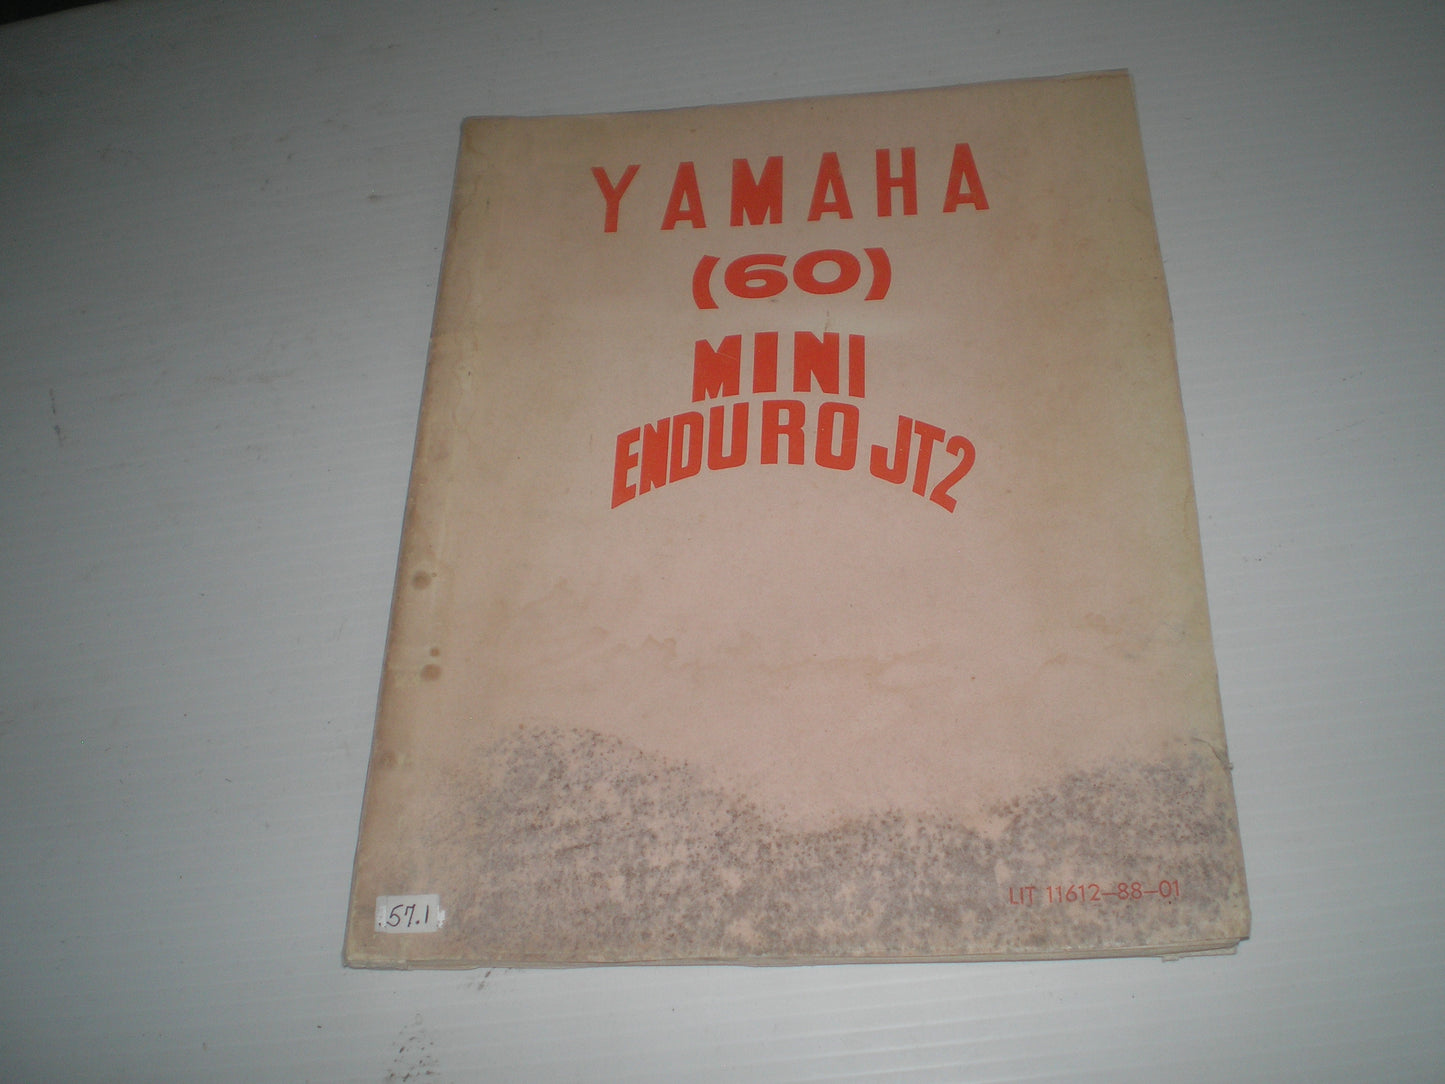 YAMAHA 60  JT2  Mini Enduro 1972  Service Manual  11612-88-01  #57.1